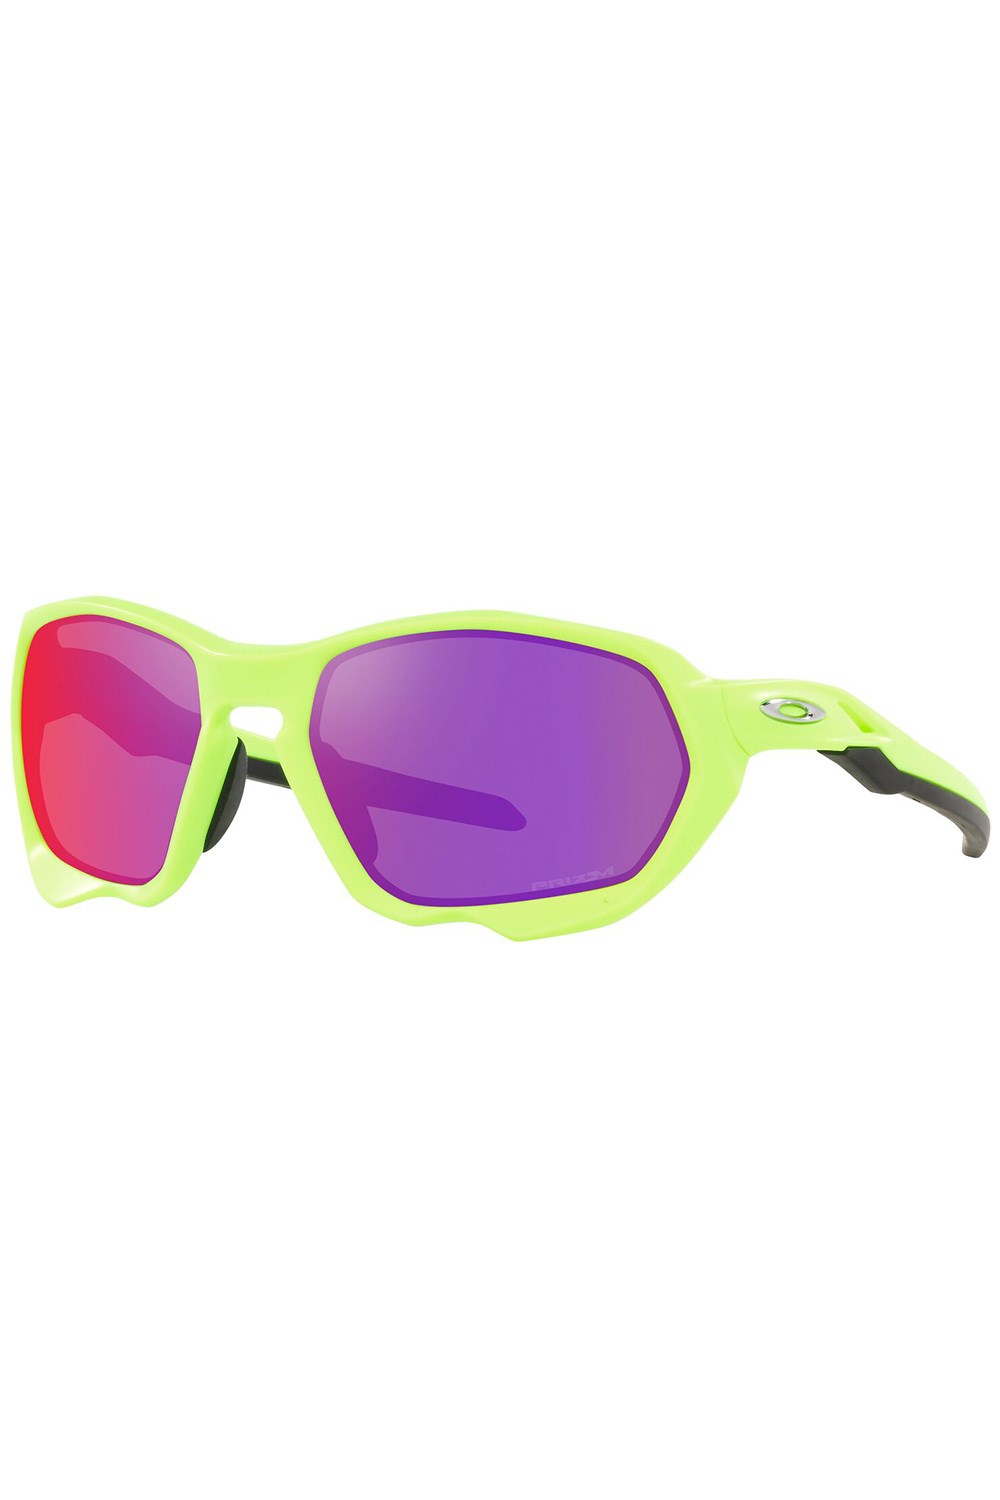 Plazma Unisex Cycling Sunglasses -